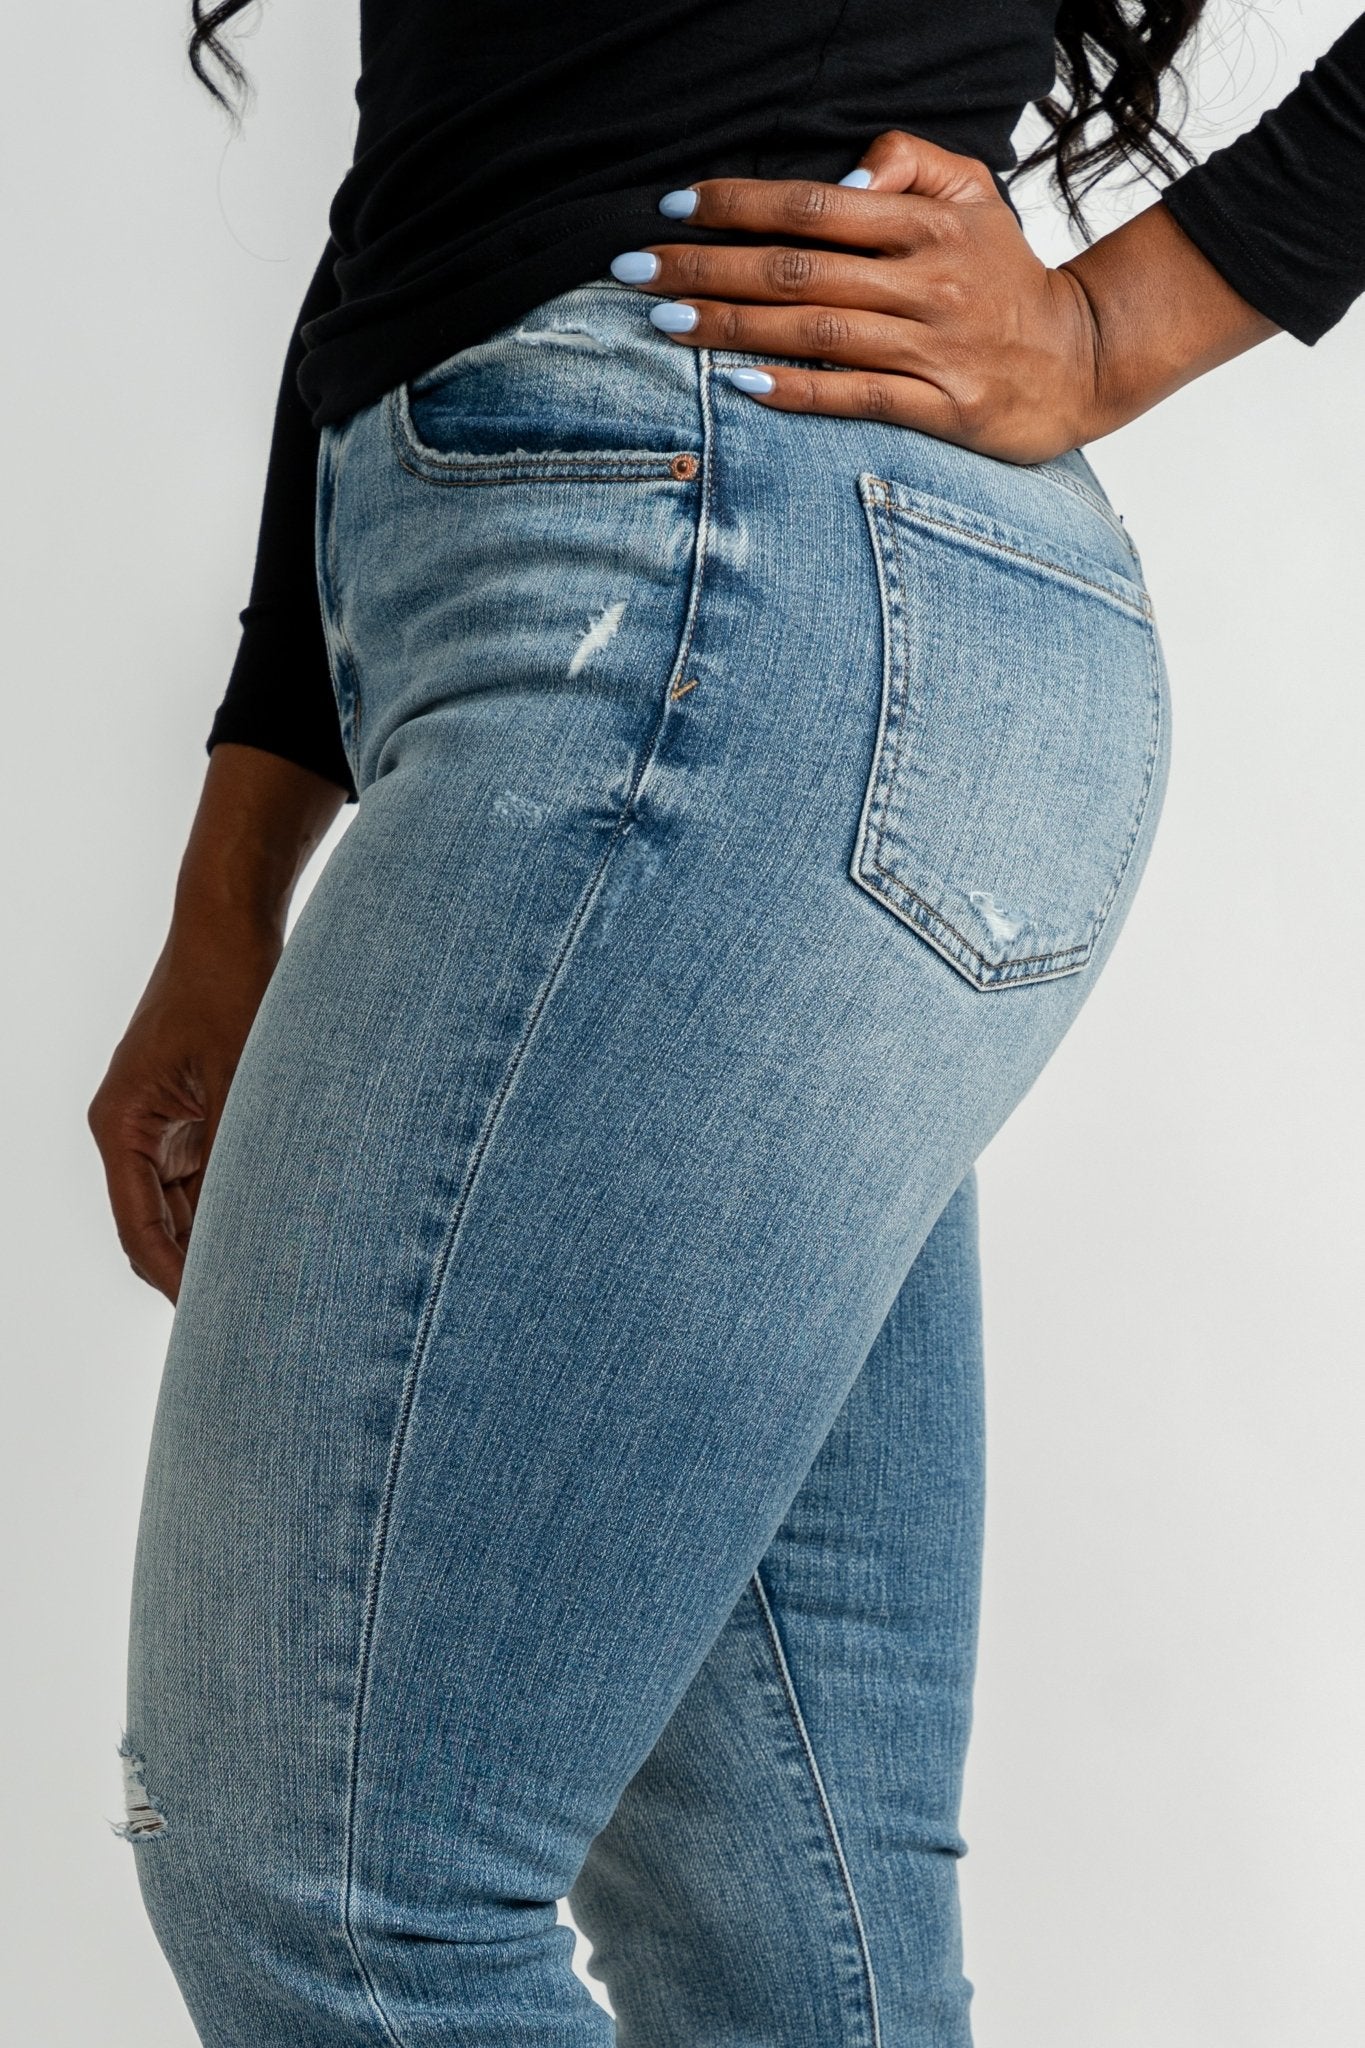 Daze denim high flare jeans slay | Lush Fashion Lounge: boutique women's jeans, fashion jeans for women, affordable fashion jeans, cute boutique jeans